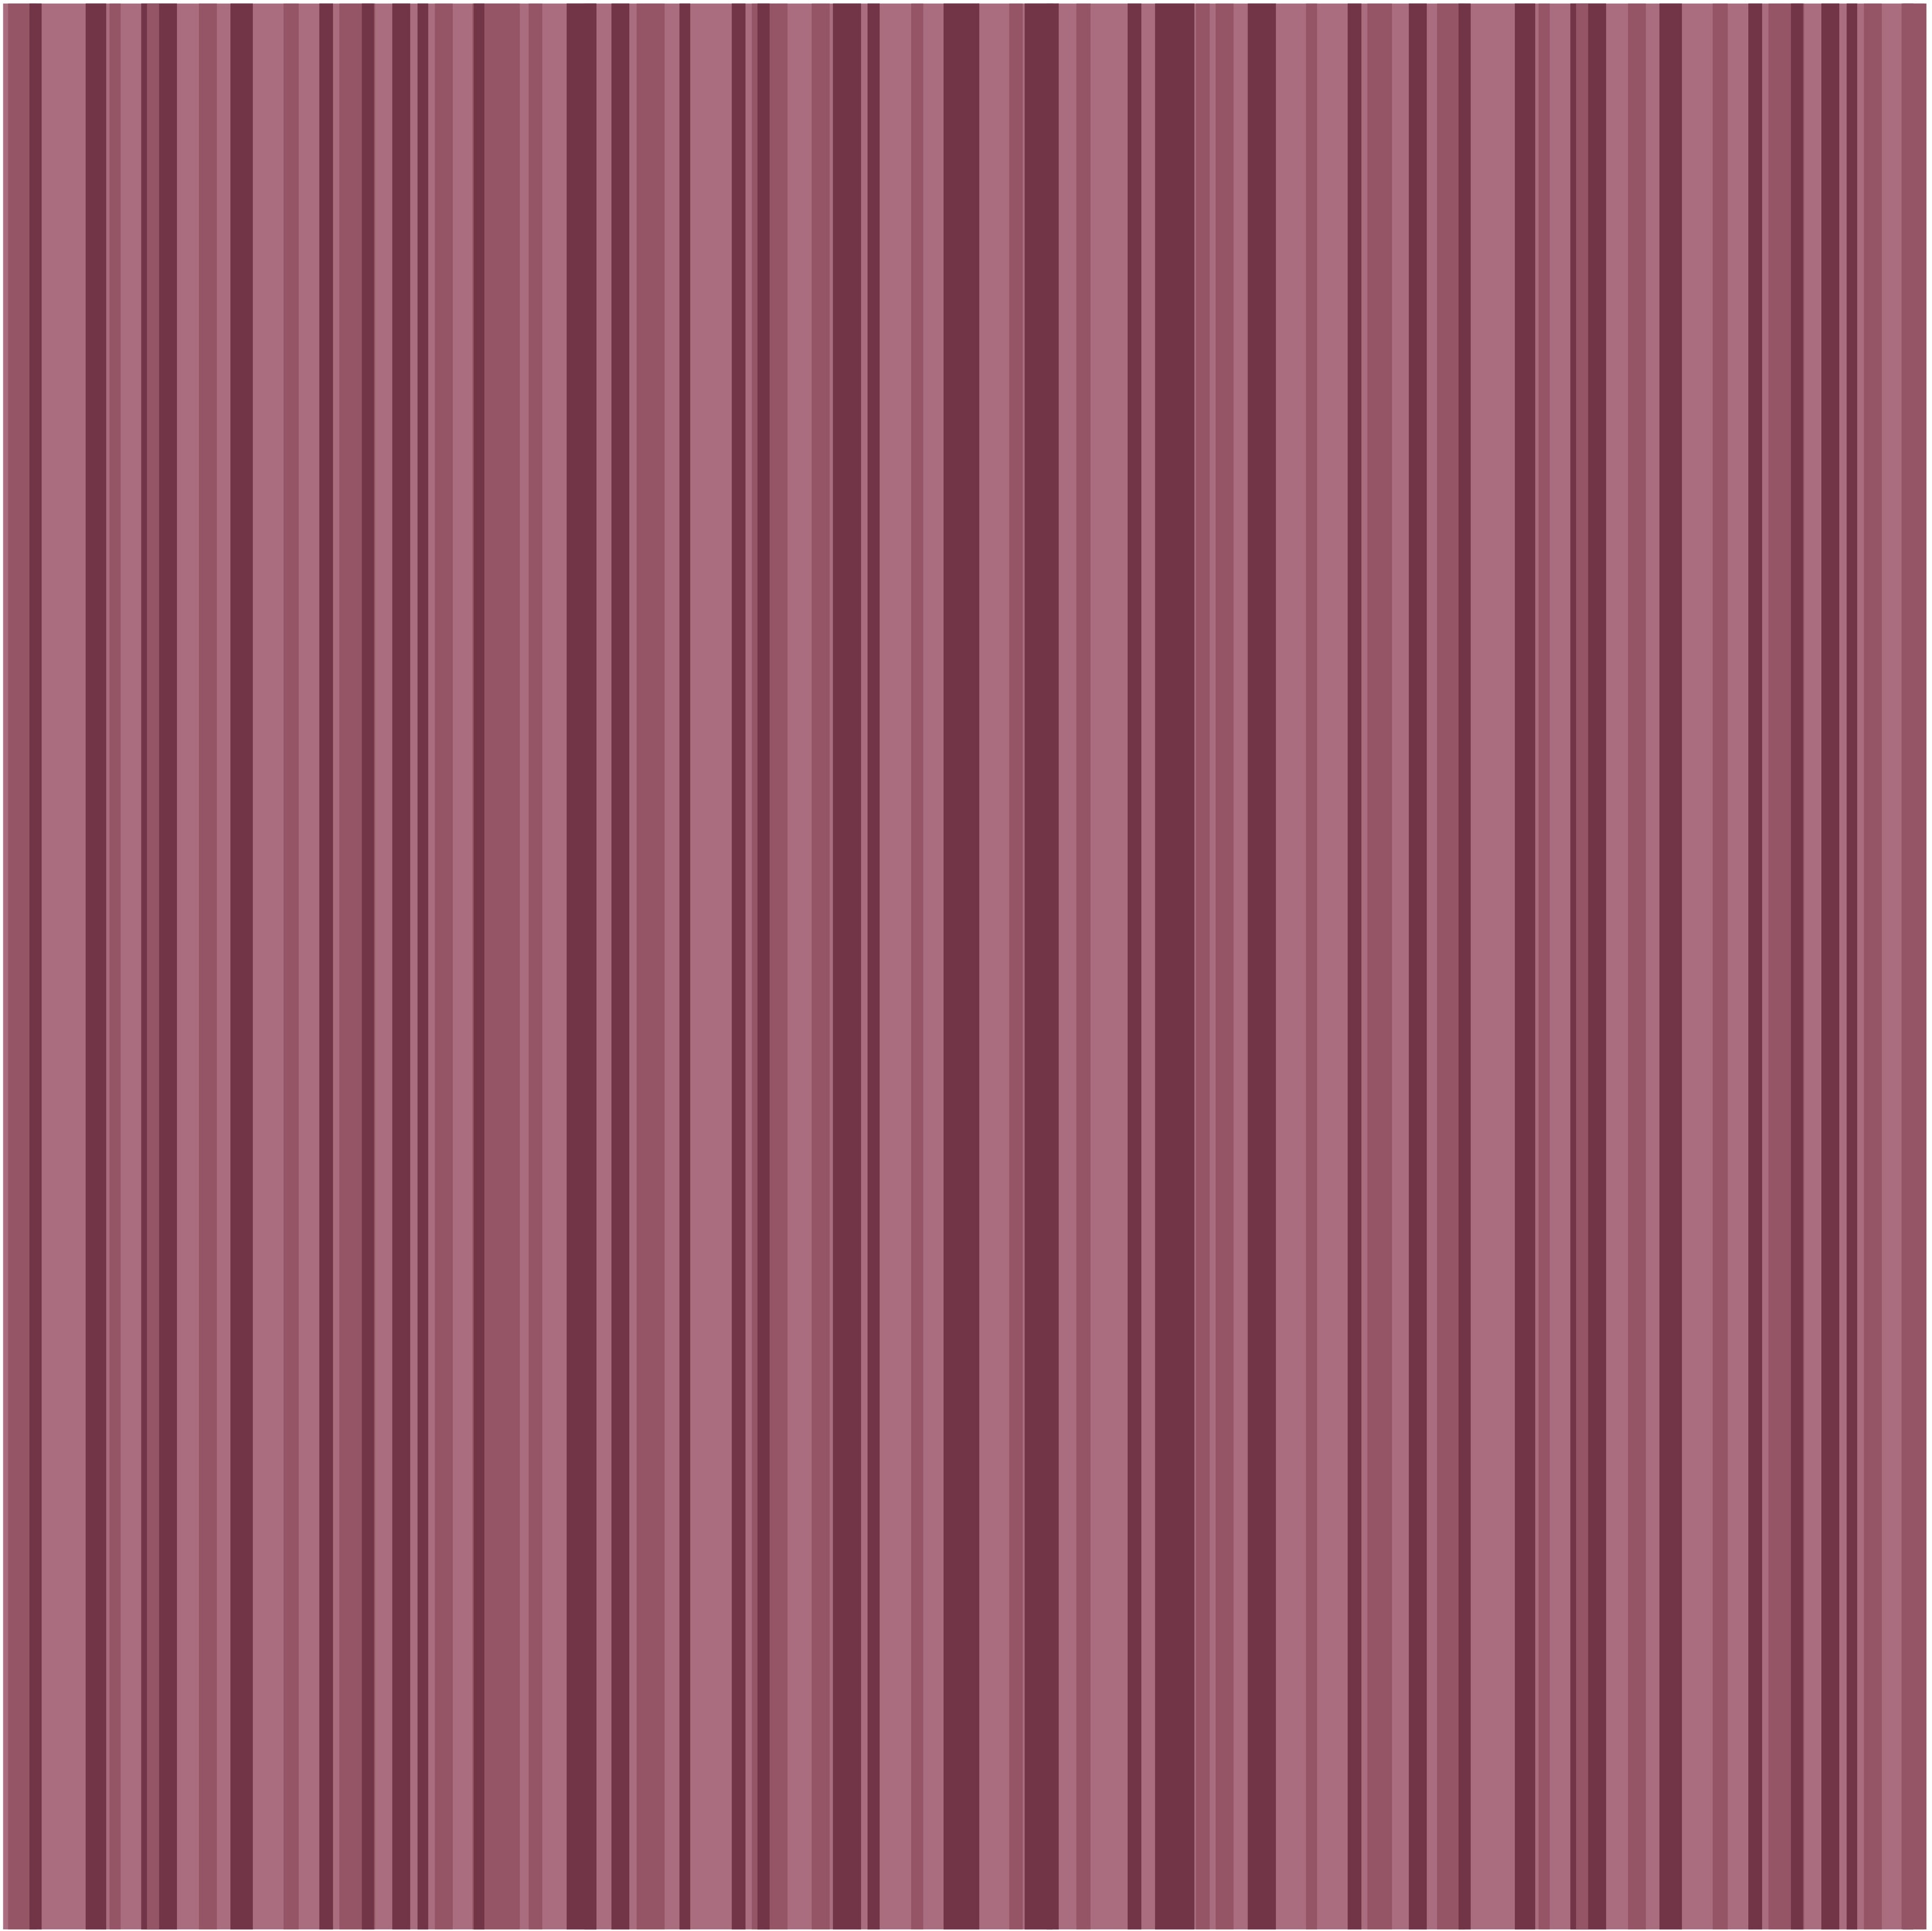 Darice Core Basics Patterned Cardstock 12 x12 Inches Dark Pink Stripe